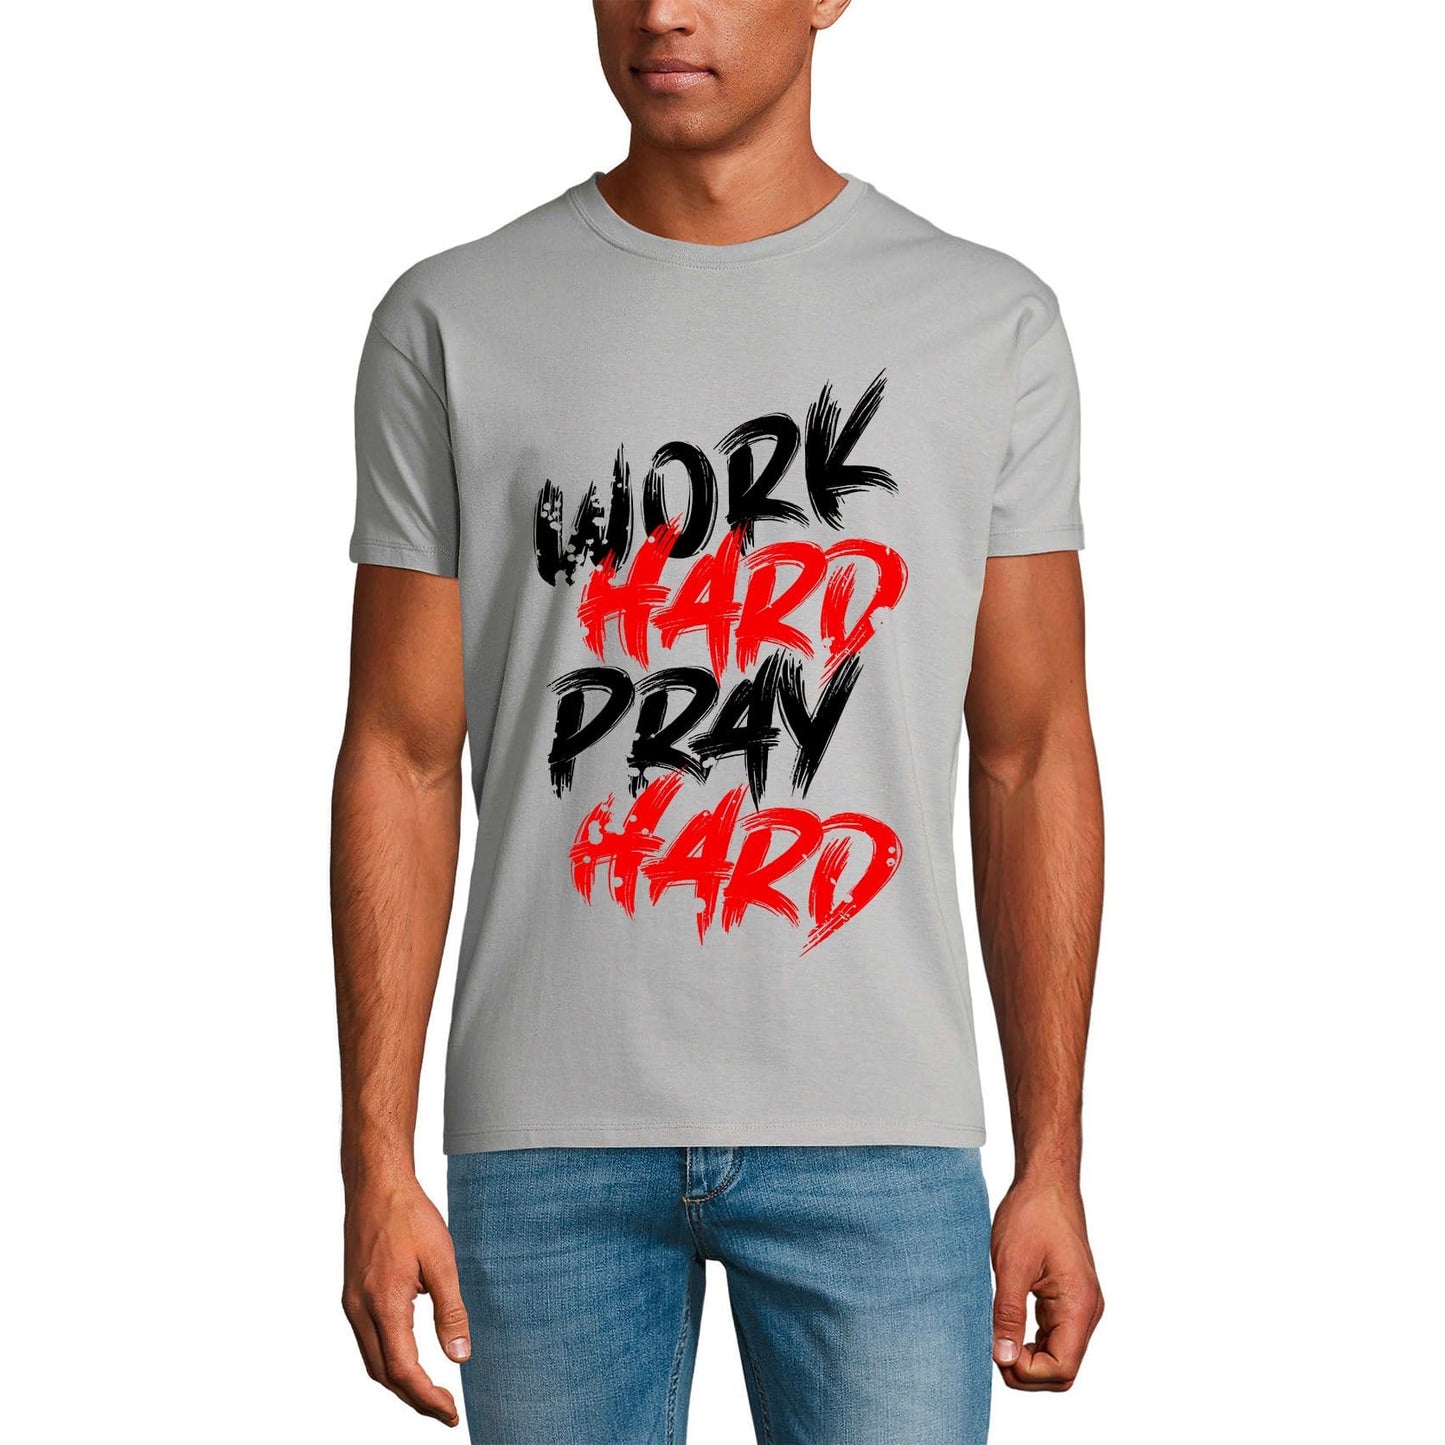 ULTRABASIC Graphic Men's T-Shirt Work Hard Pray Hard - Religious Message